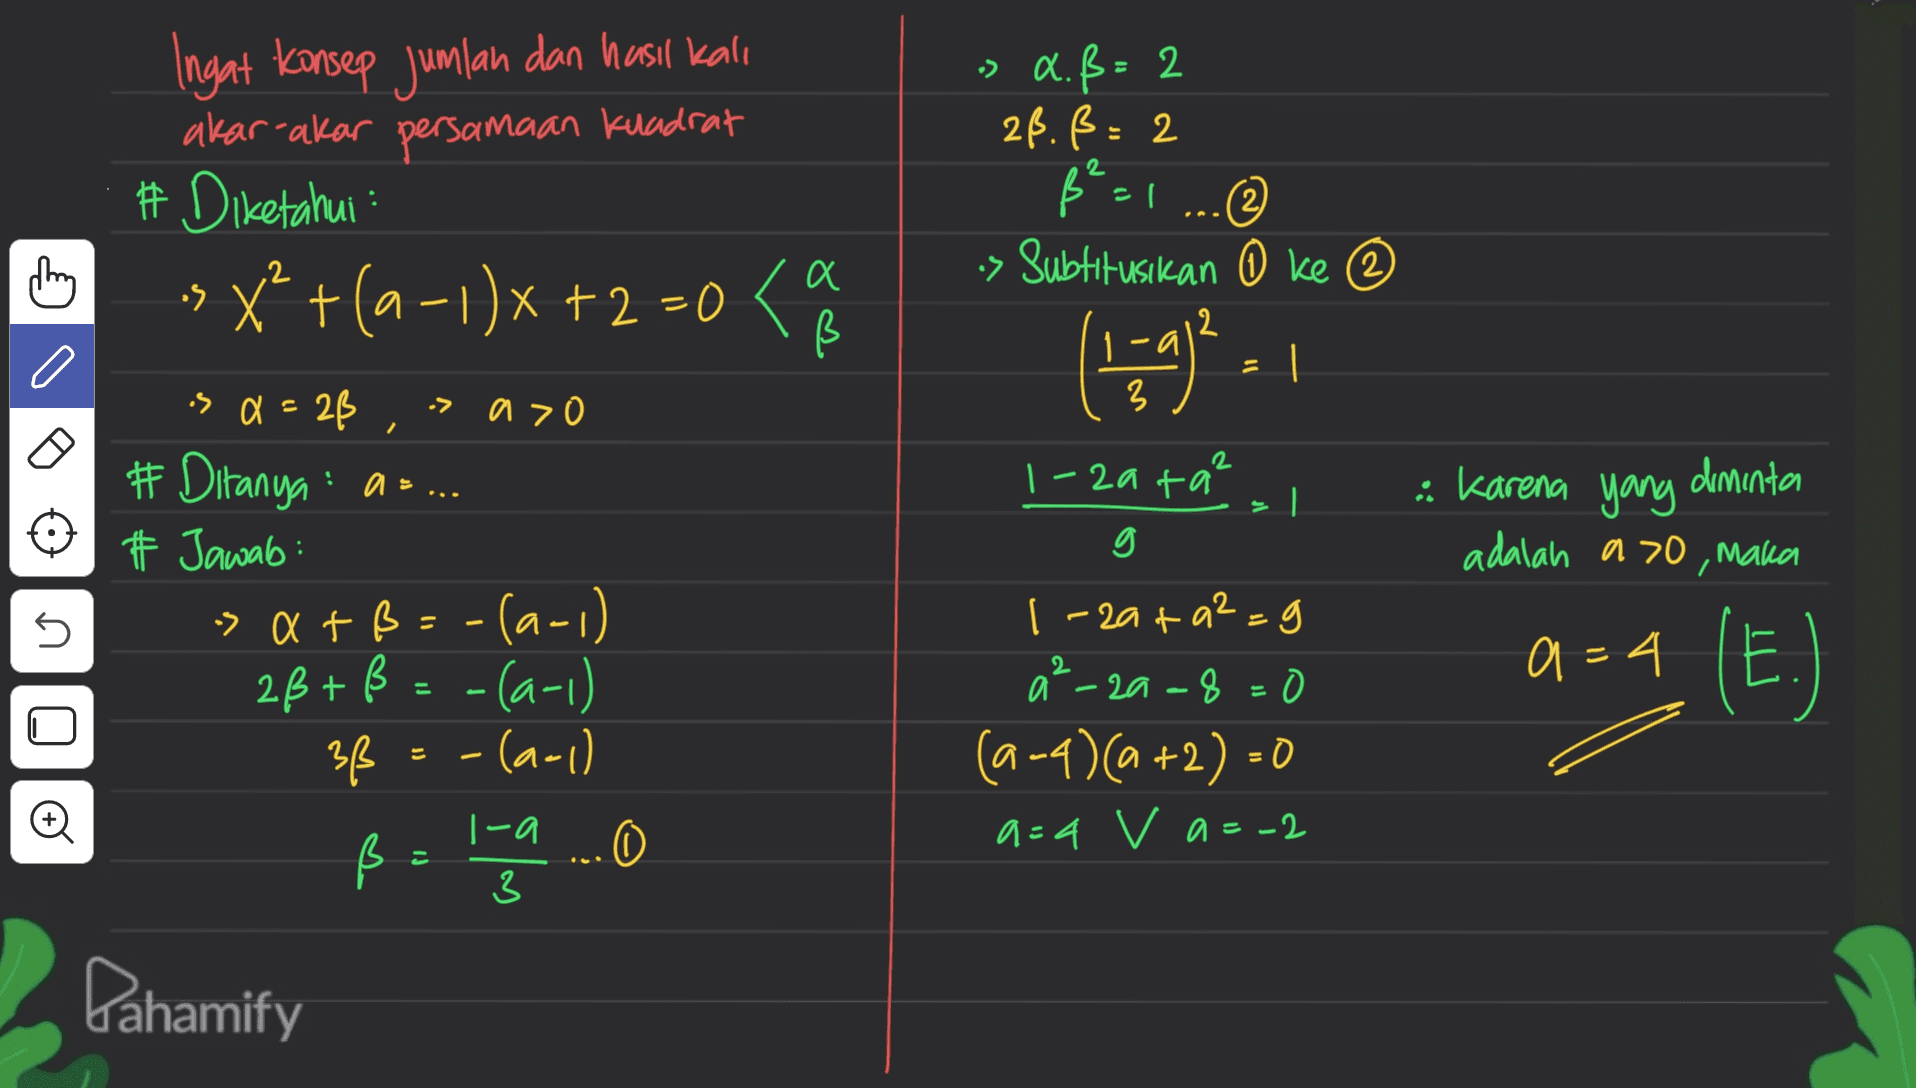 • 2.ß- 2 2ß. ß : 2 B²=1 © is Subtitusikan ④ ke ② they 11 > a>0 3 Ingat Konsep jumlan dan hasil kall akar-akar persamaan kuadrat # Diketahui os X? Ha-1)x + 2-0 <as is a = 26, # Ditanya : as... # Jawab: -> a + ß= -la-1) 28+ ß = -(6-1) 3ß =-(ard ß O . у : karena yang diminta 1-2a ta? “. adalah azo, maka 5 a=4 (E. 1-rata2=g a²-20-8=0 (a-4)(a +2) - a=4 v a=-2 1-a ...o 3 Pahamify 